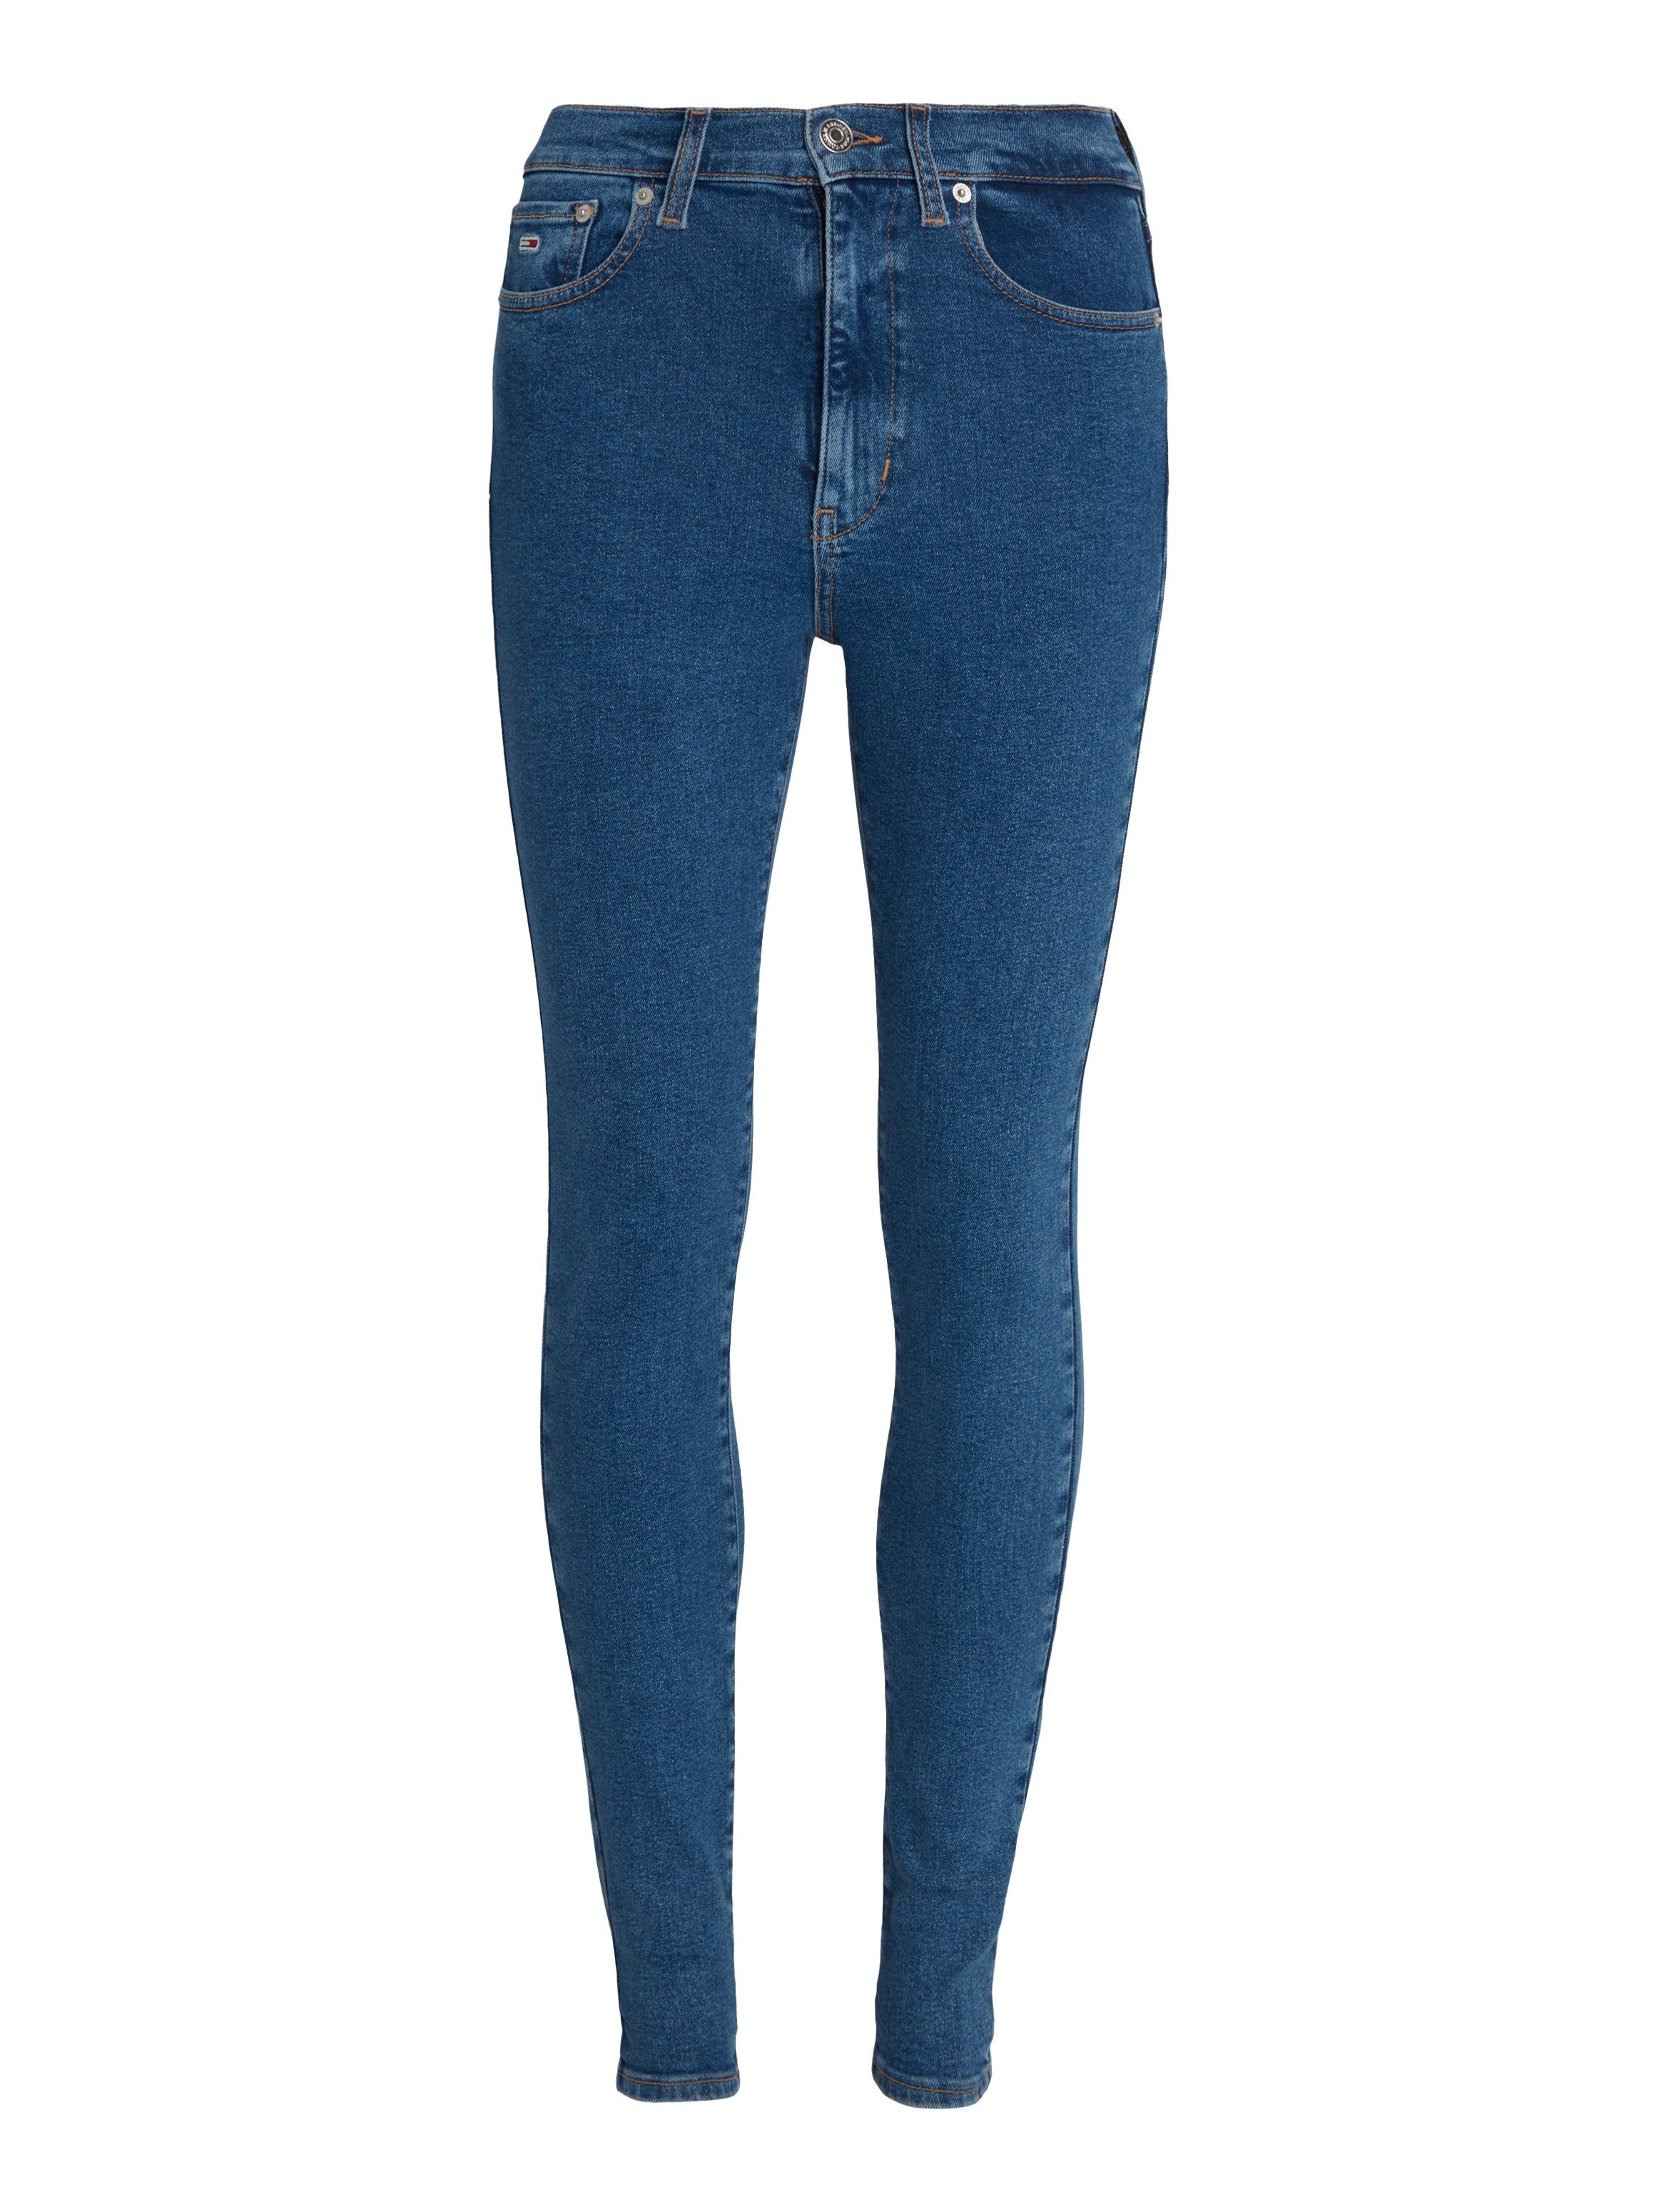 Sylvia Tommy Bequeme Jeans mid Jeans blue30 Ledermarkenlabel mit